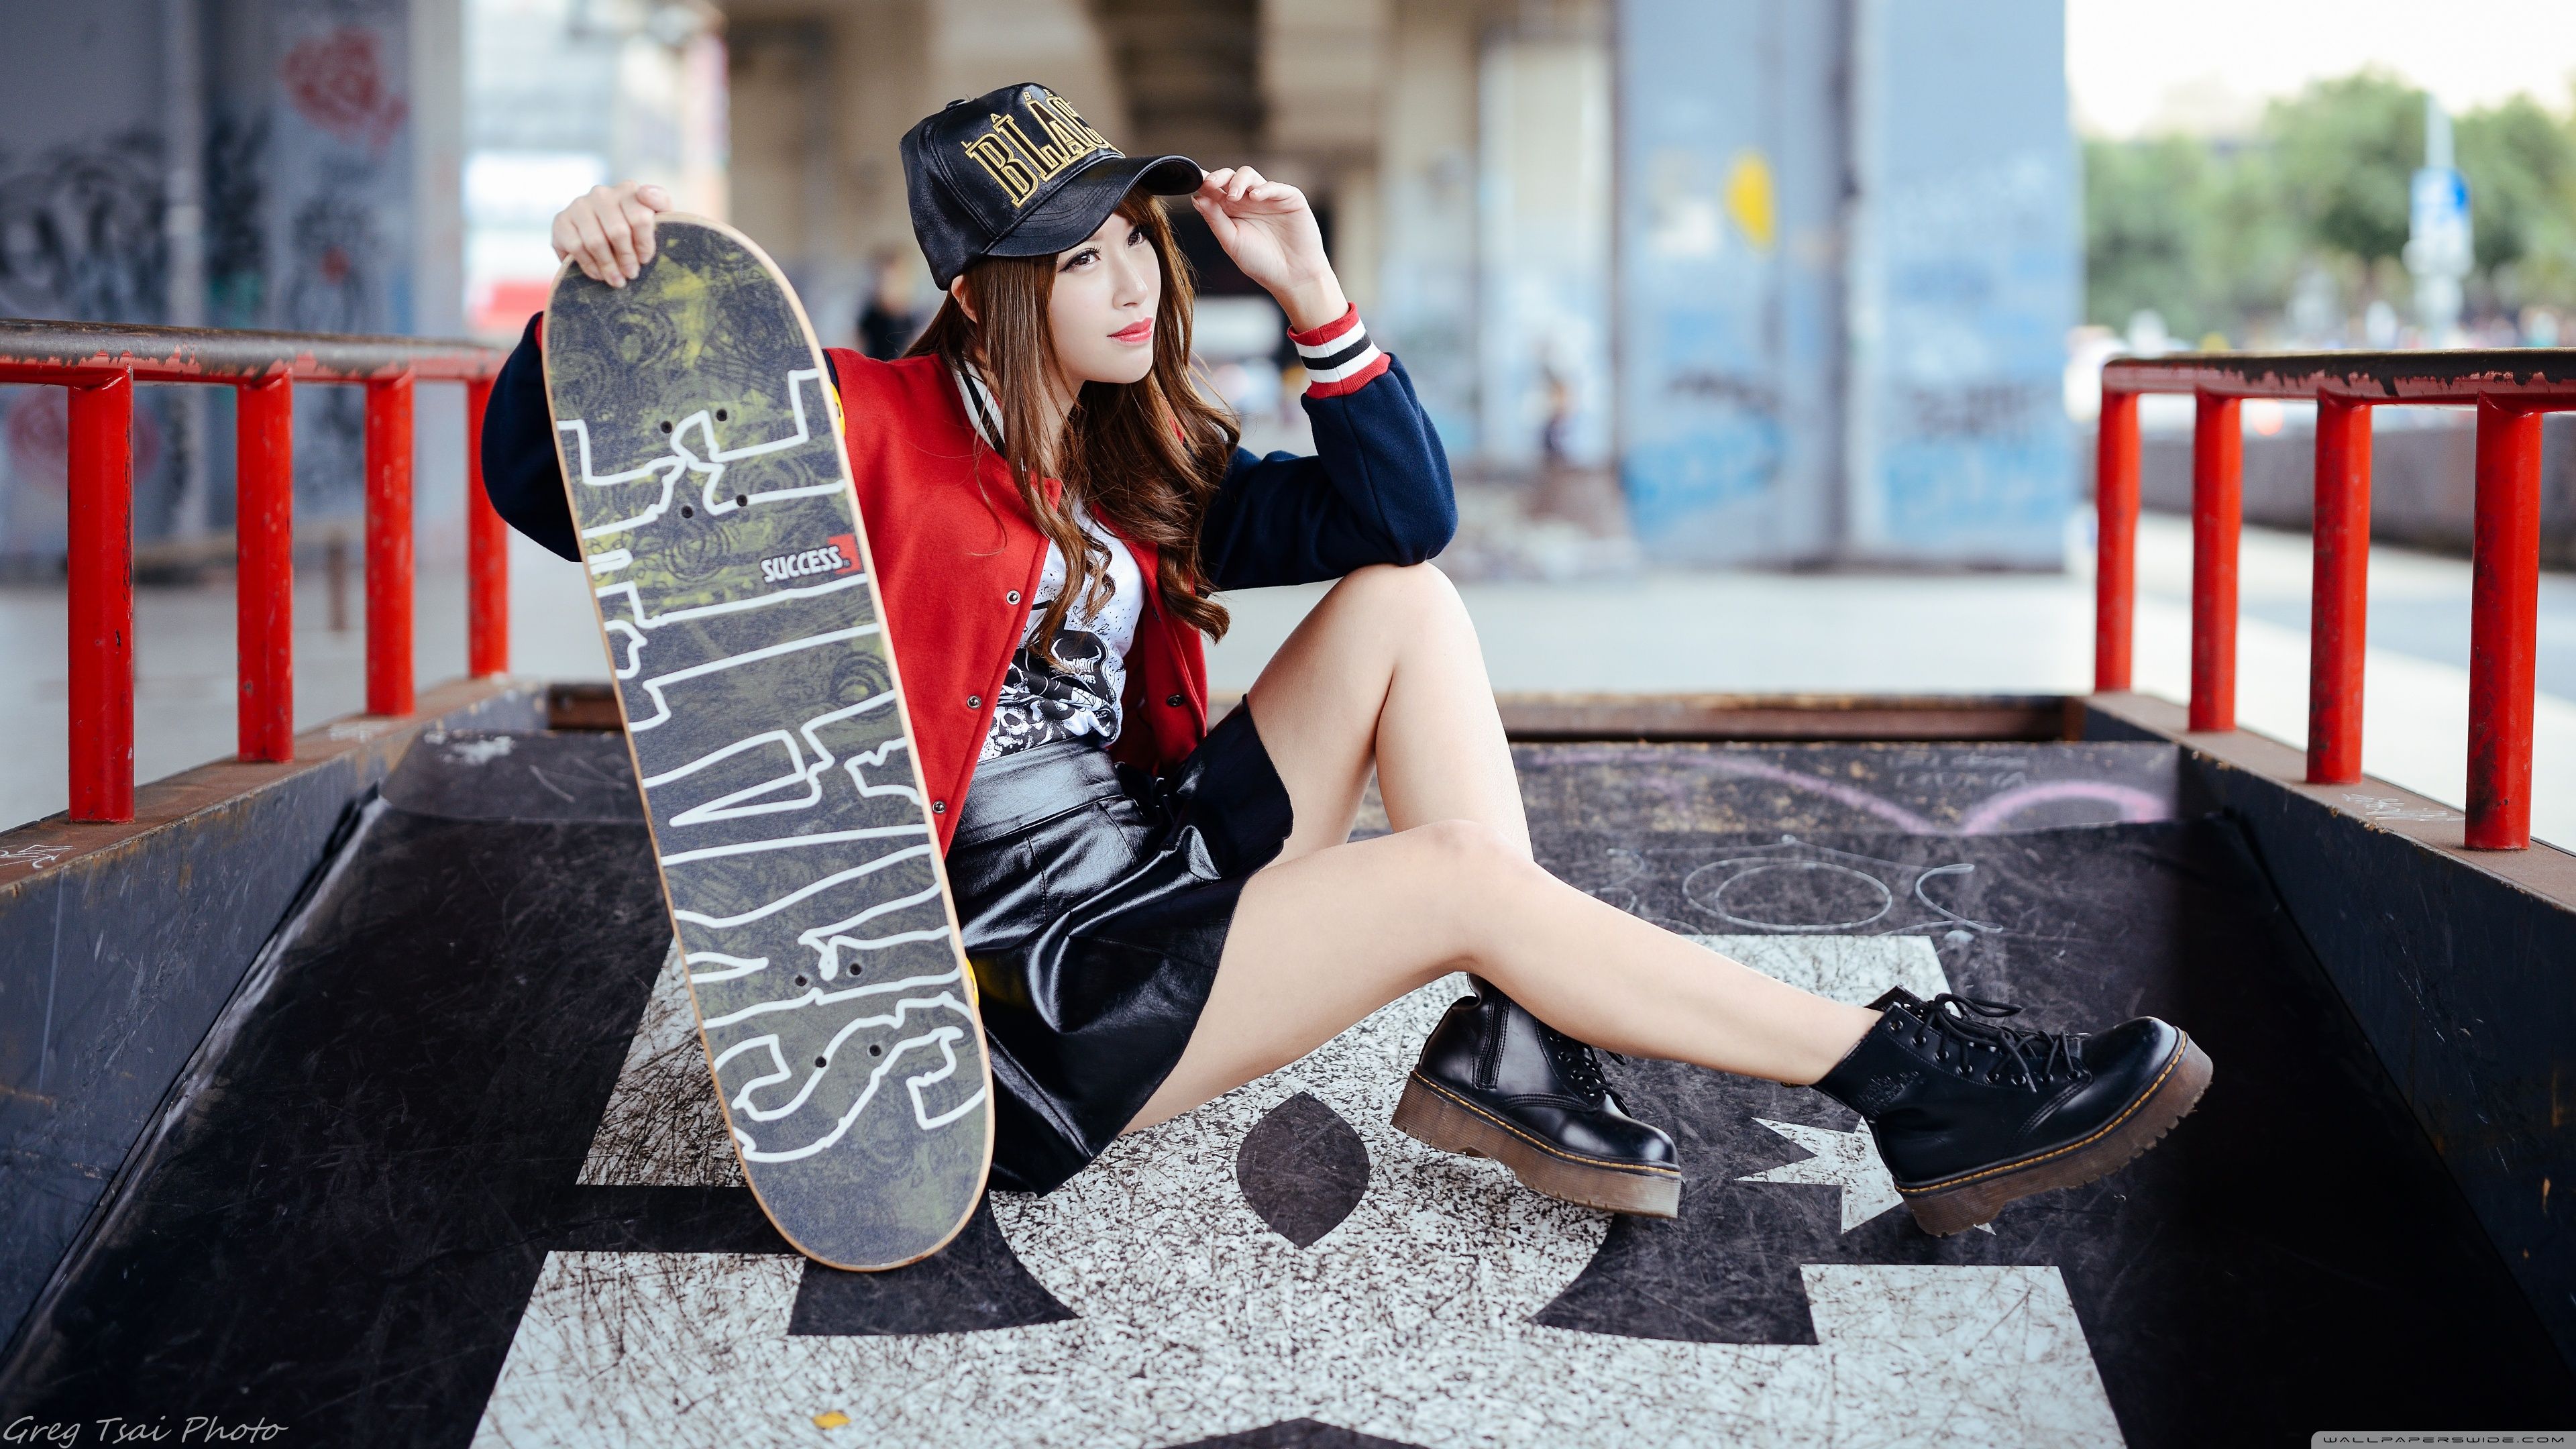 Girl Skateboarder Style Ultra HD .wallpaperwide.com